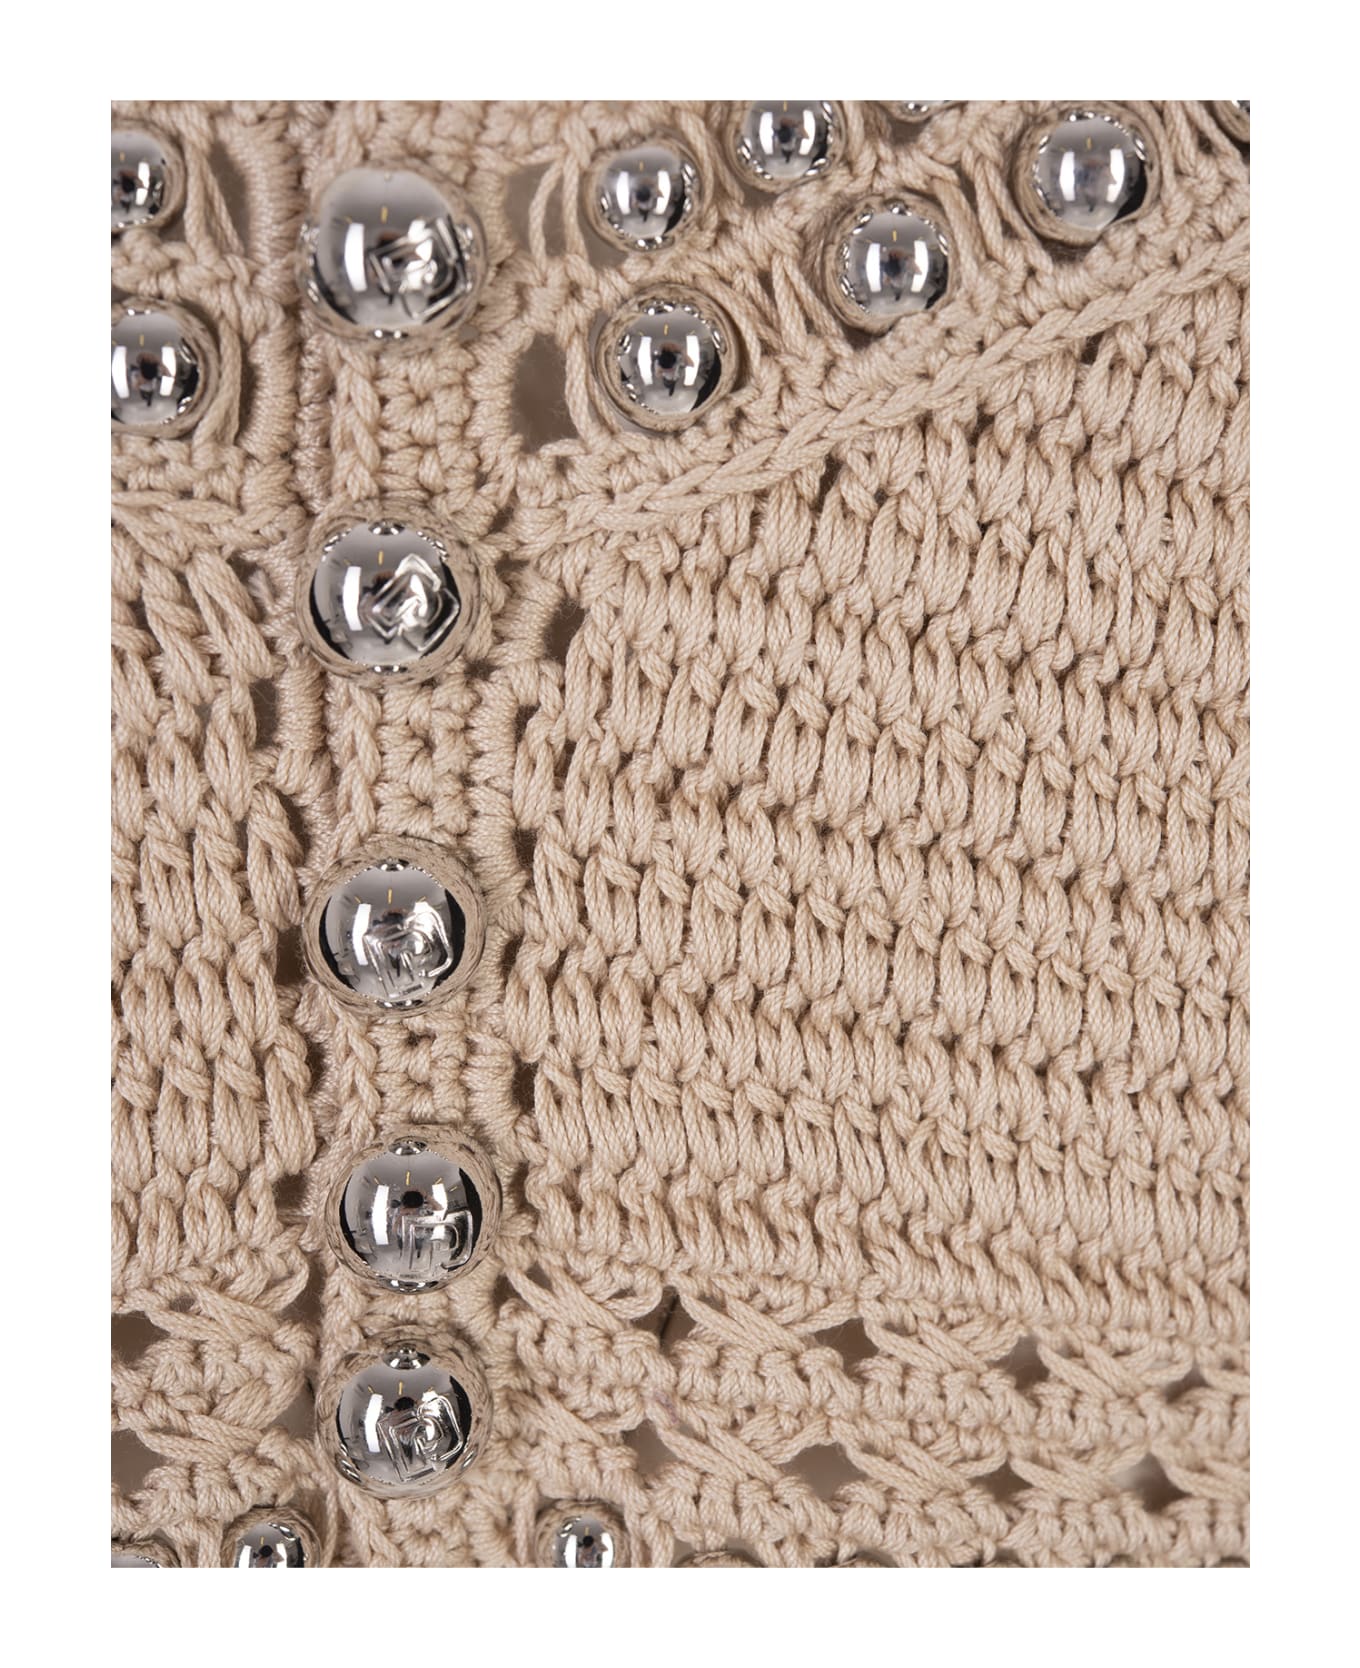 Paco Rabanne Beige Crochet Top With Pearls - BEIGE